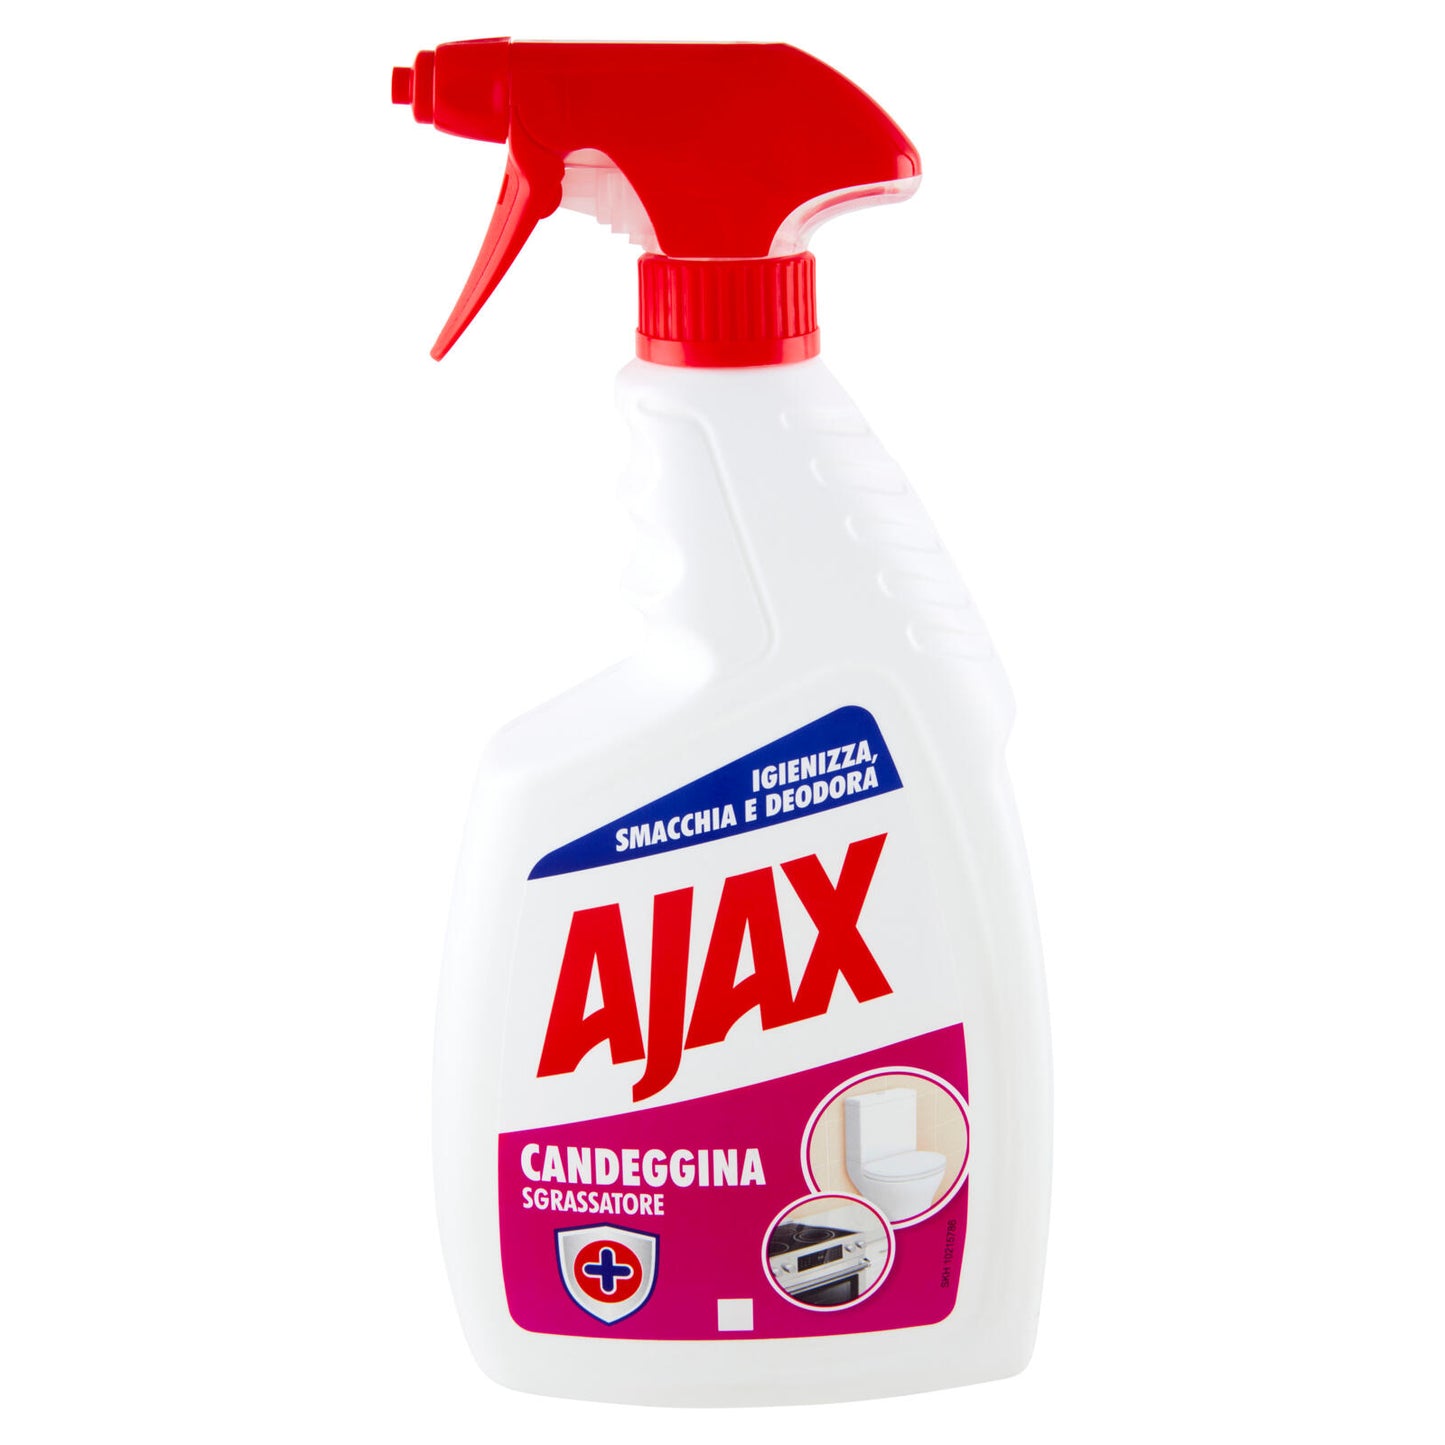 Ajax detersivo Spray con candeggina igienizzante, 675 ml